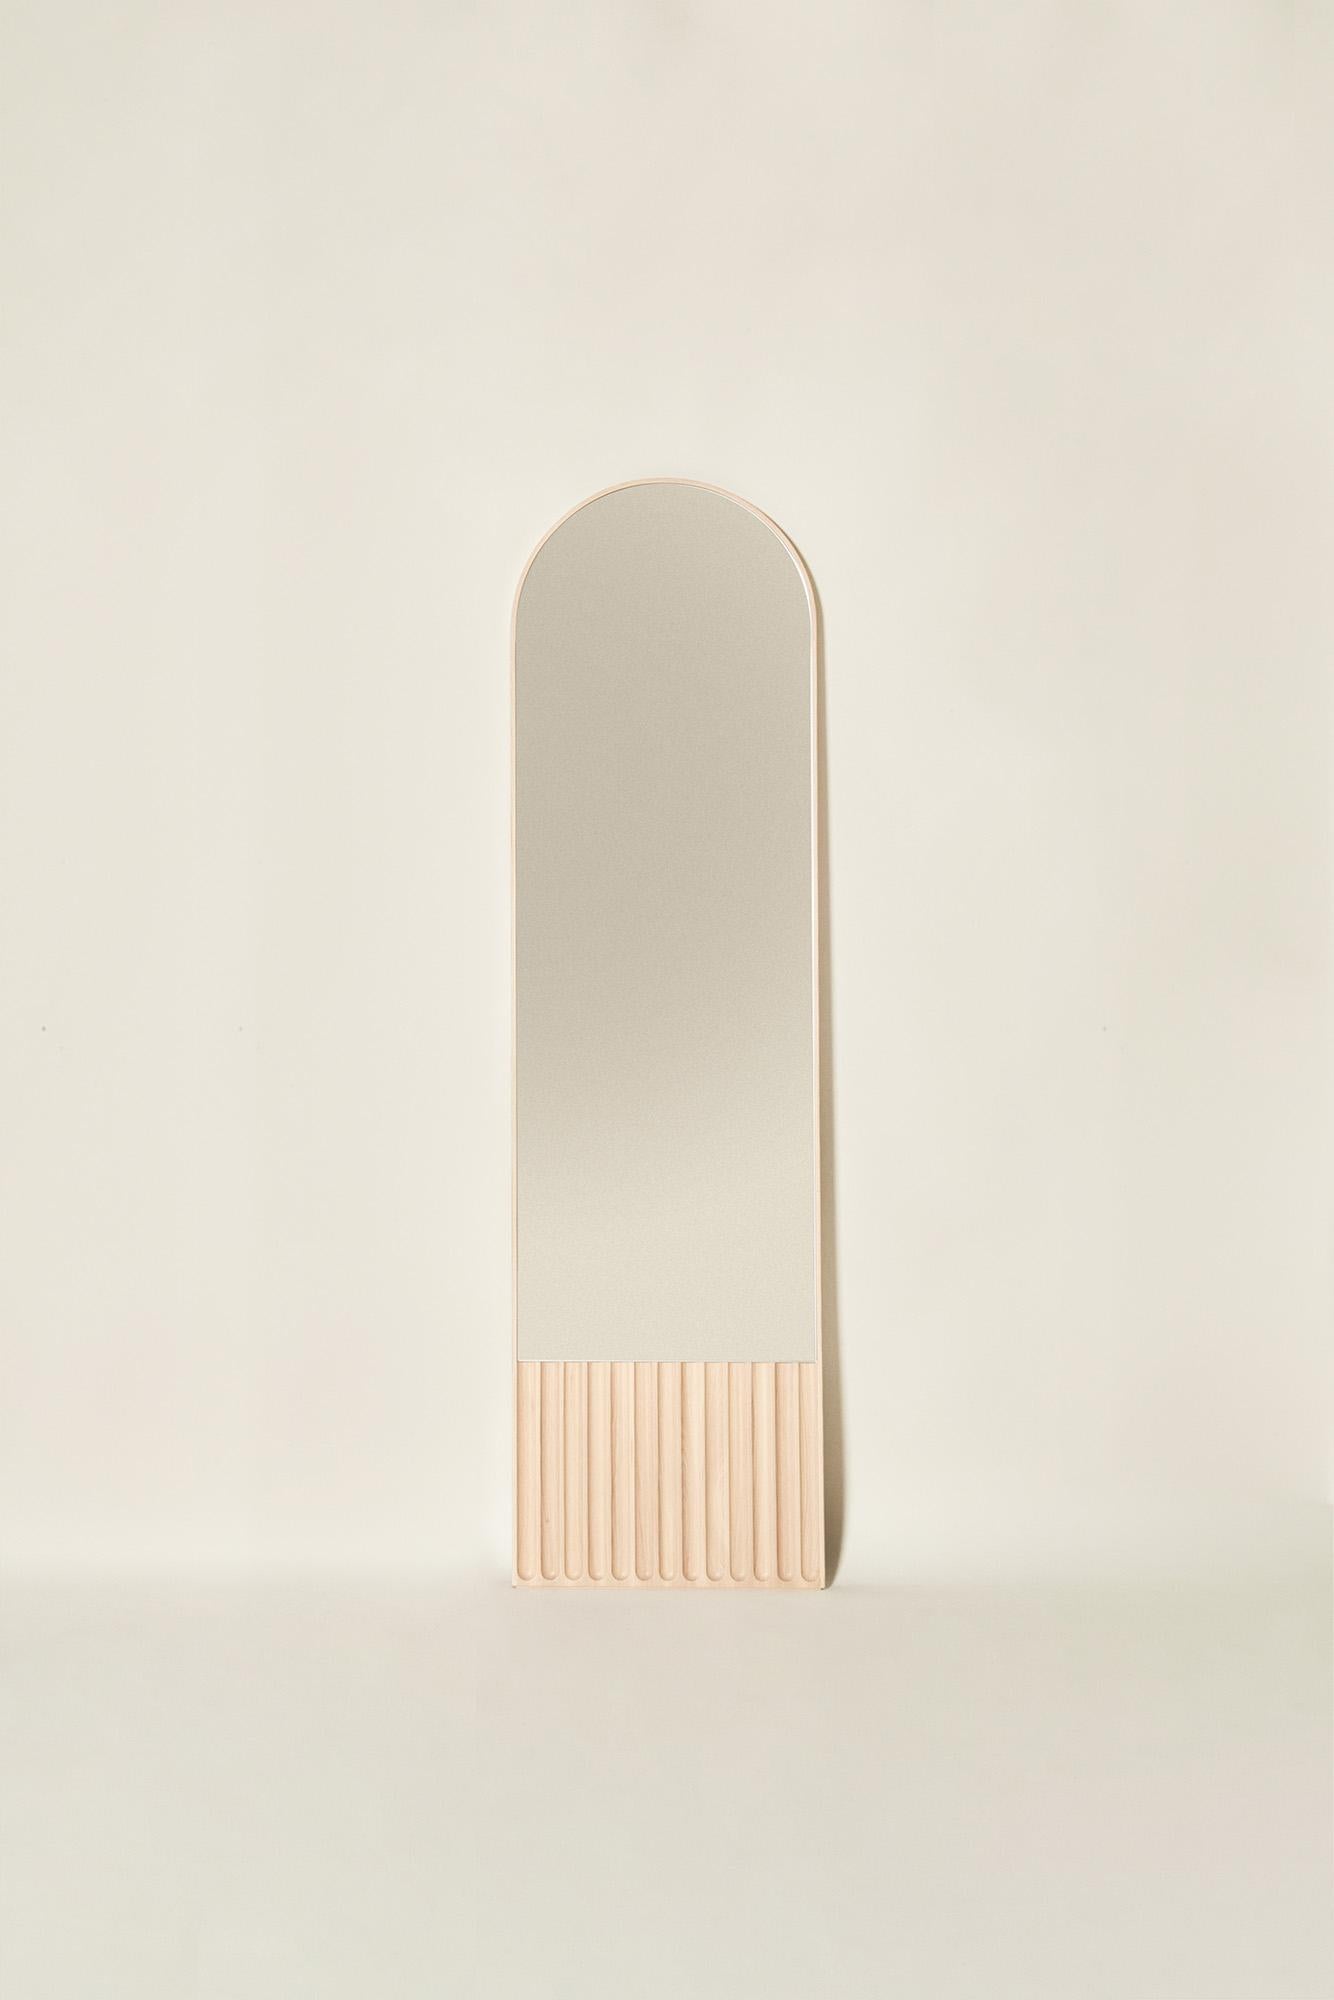 Tutto Sesto Solid Wood Oval Mirror, Ash in Black Finish, Contemporary For Sale 1